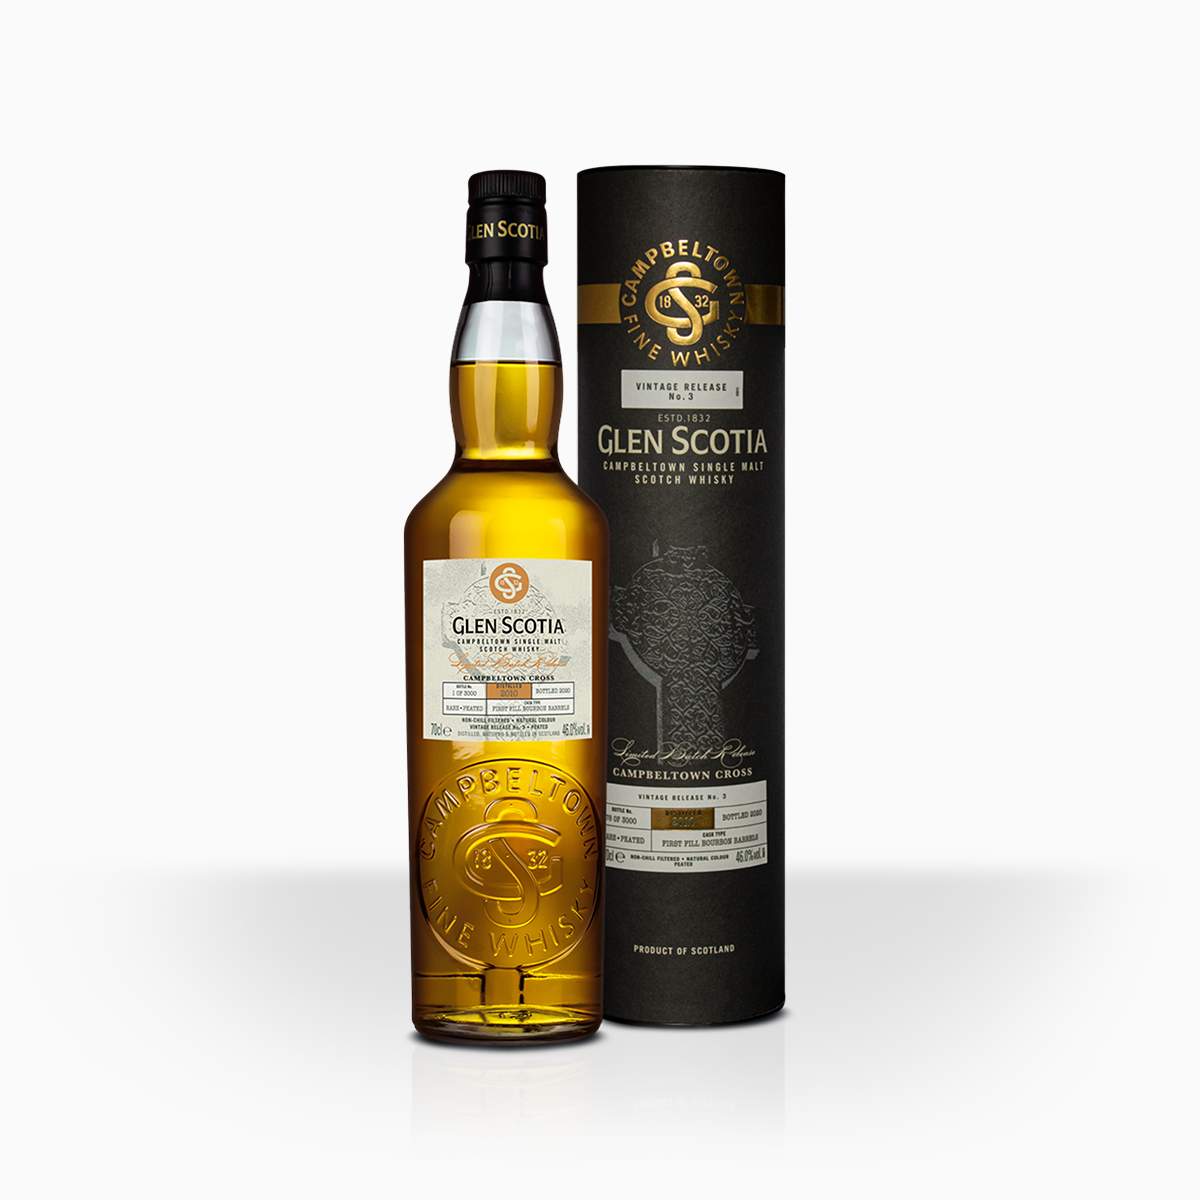 #2851 Whisky Glen Scotia 2010 Release 03 46% 0,7l